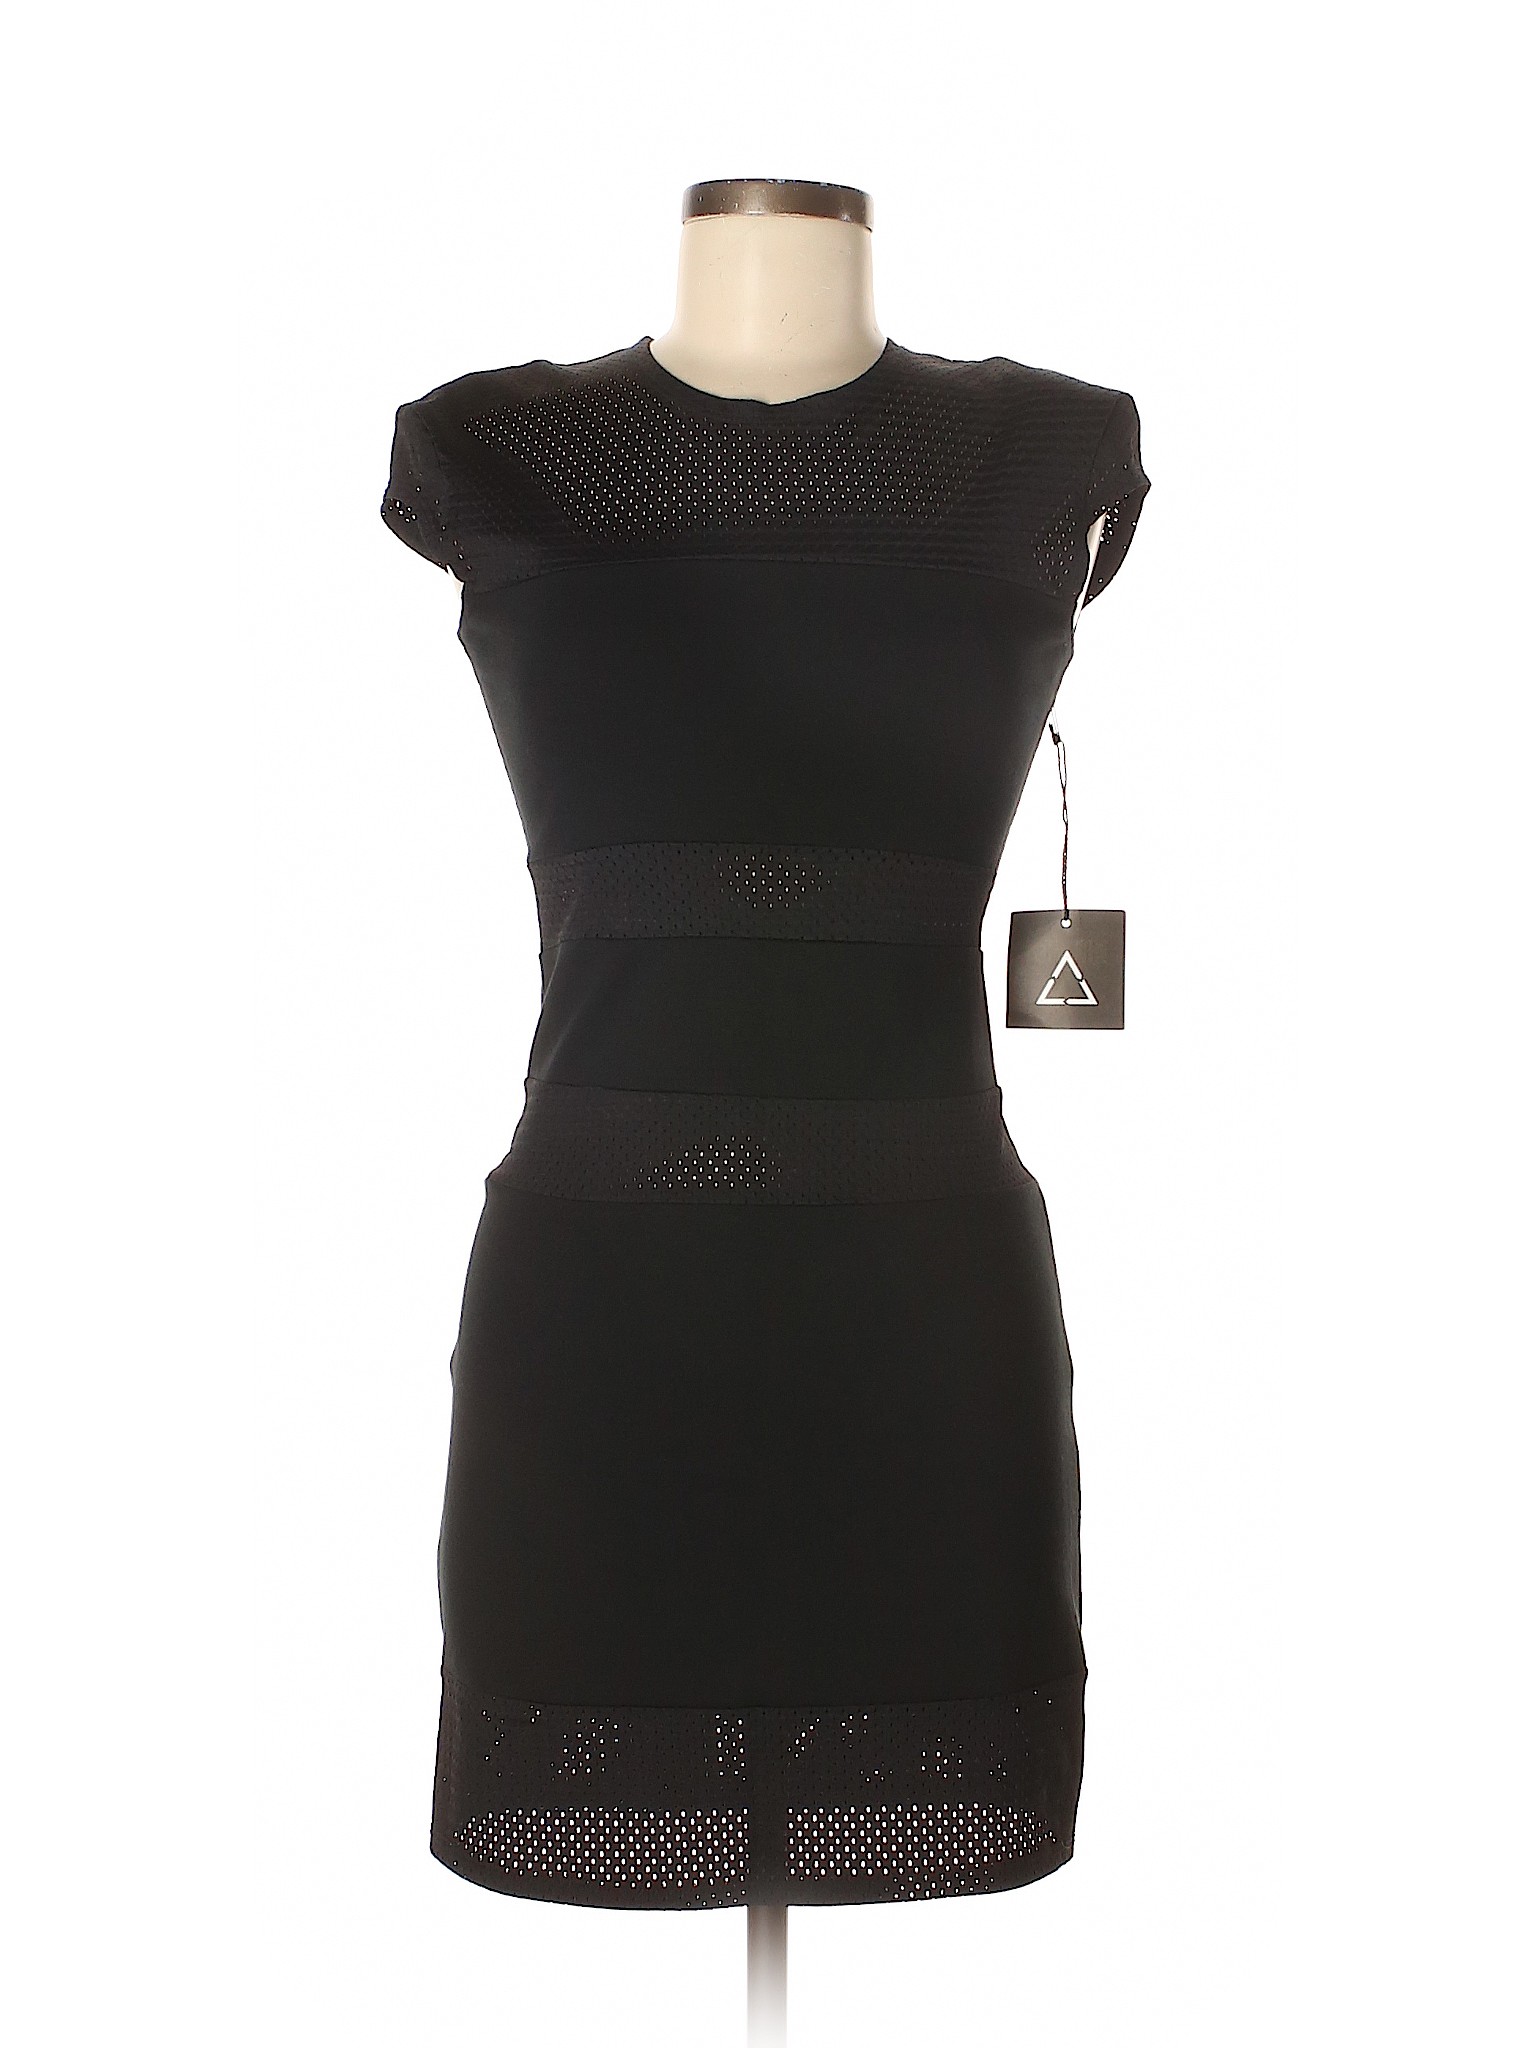 Reformation Solid Black Casual Dress Size M - 48% off | thredUP